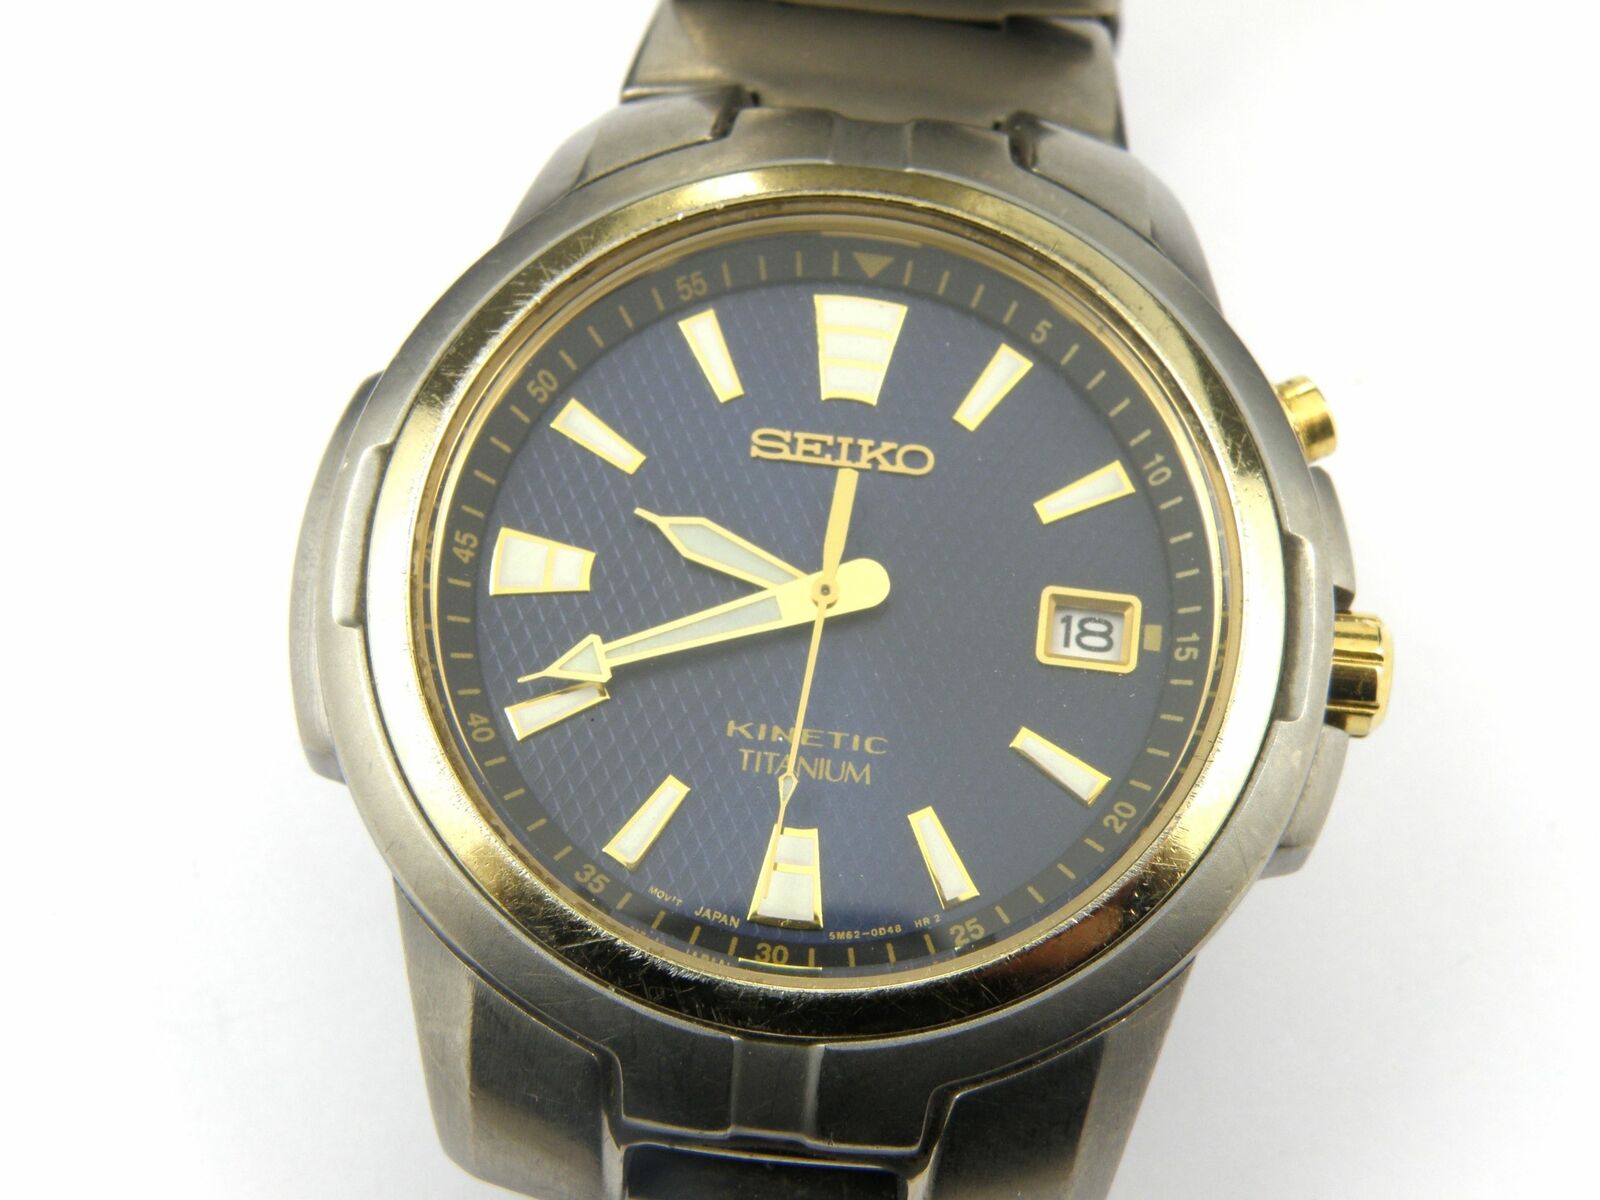 Mens Seiko Kinetic Titanium Watch 5M62-0C10 - 100m - NEW CAPACITOR | eBay